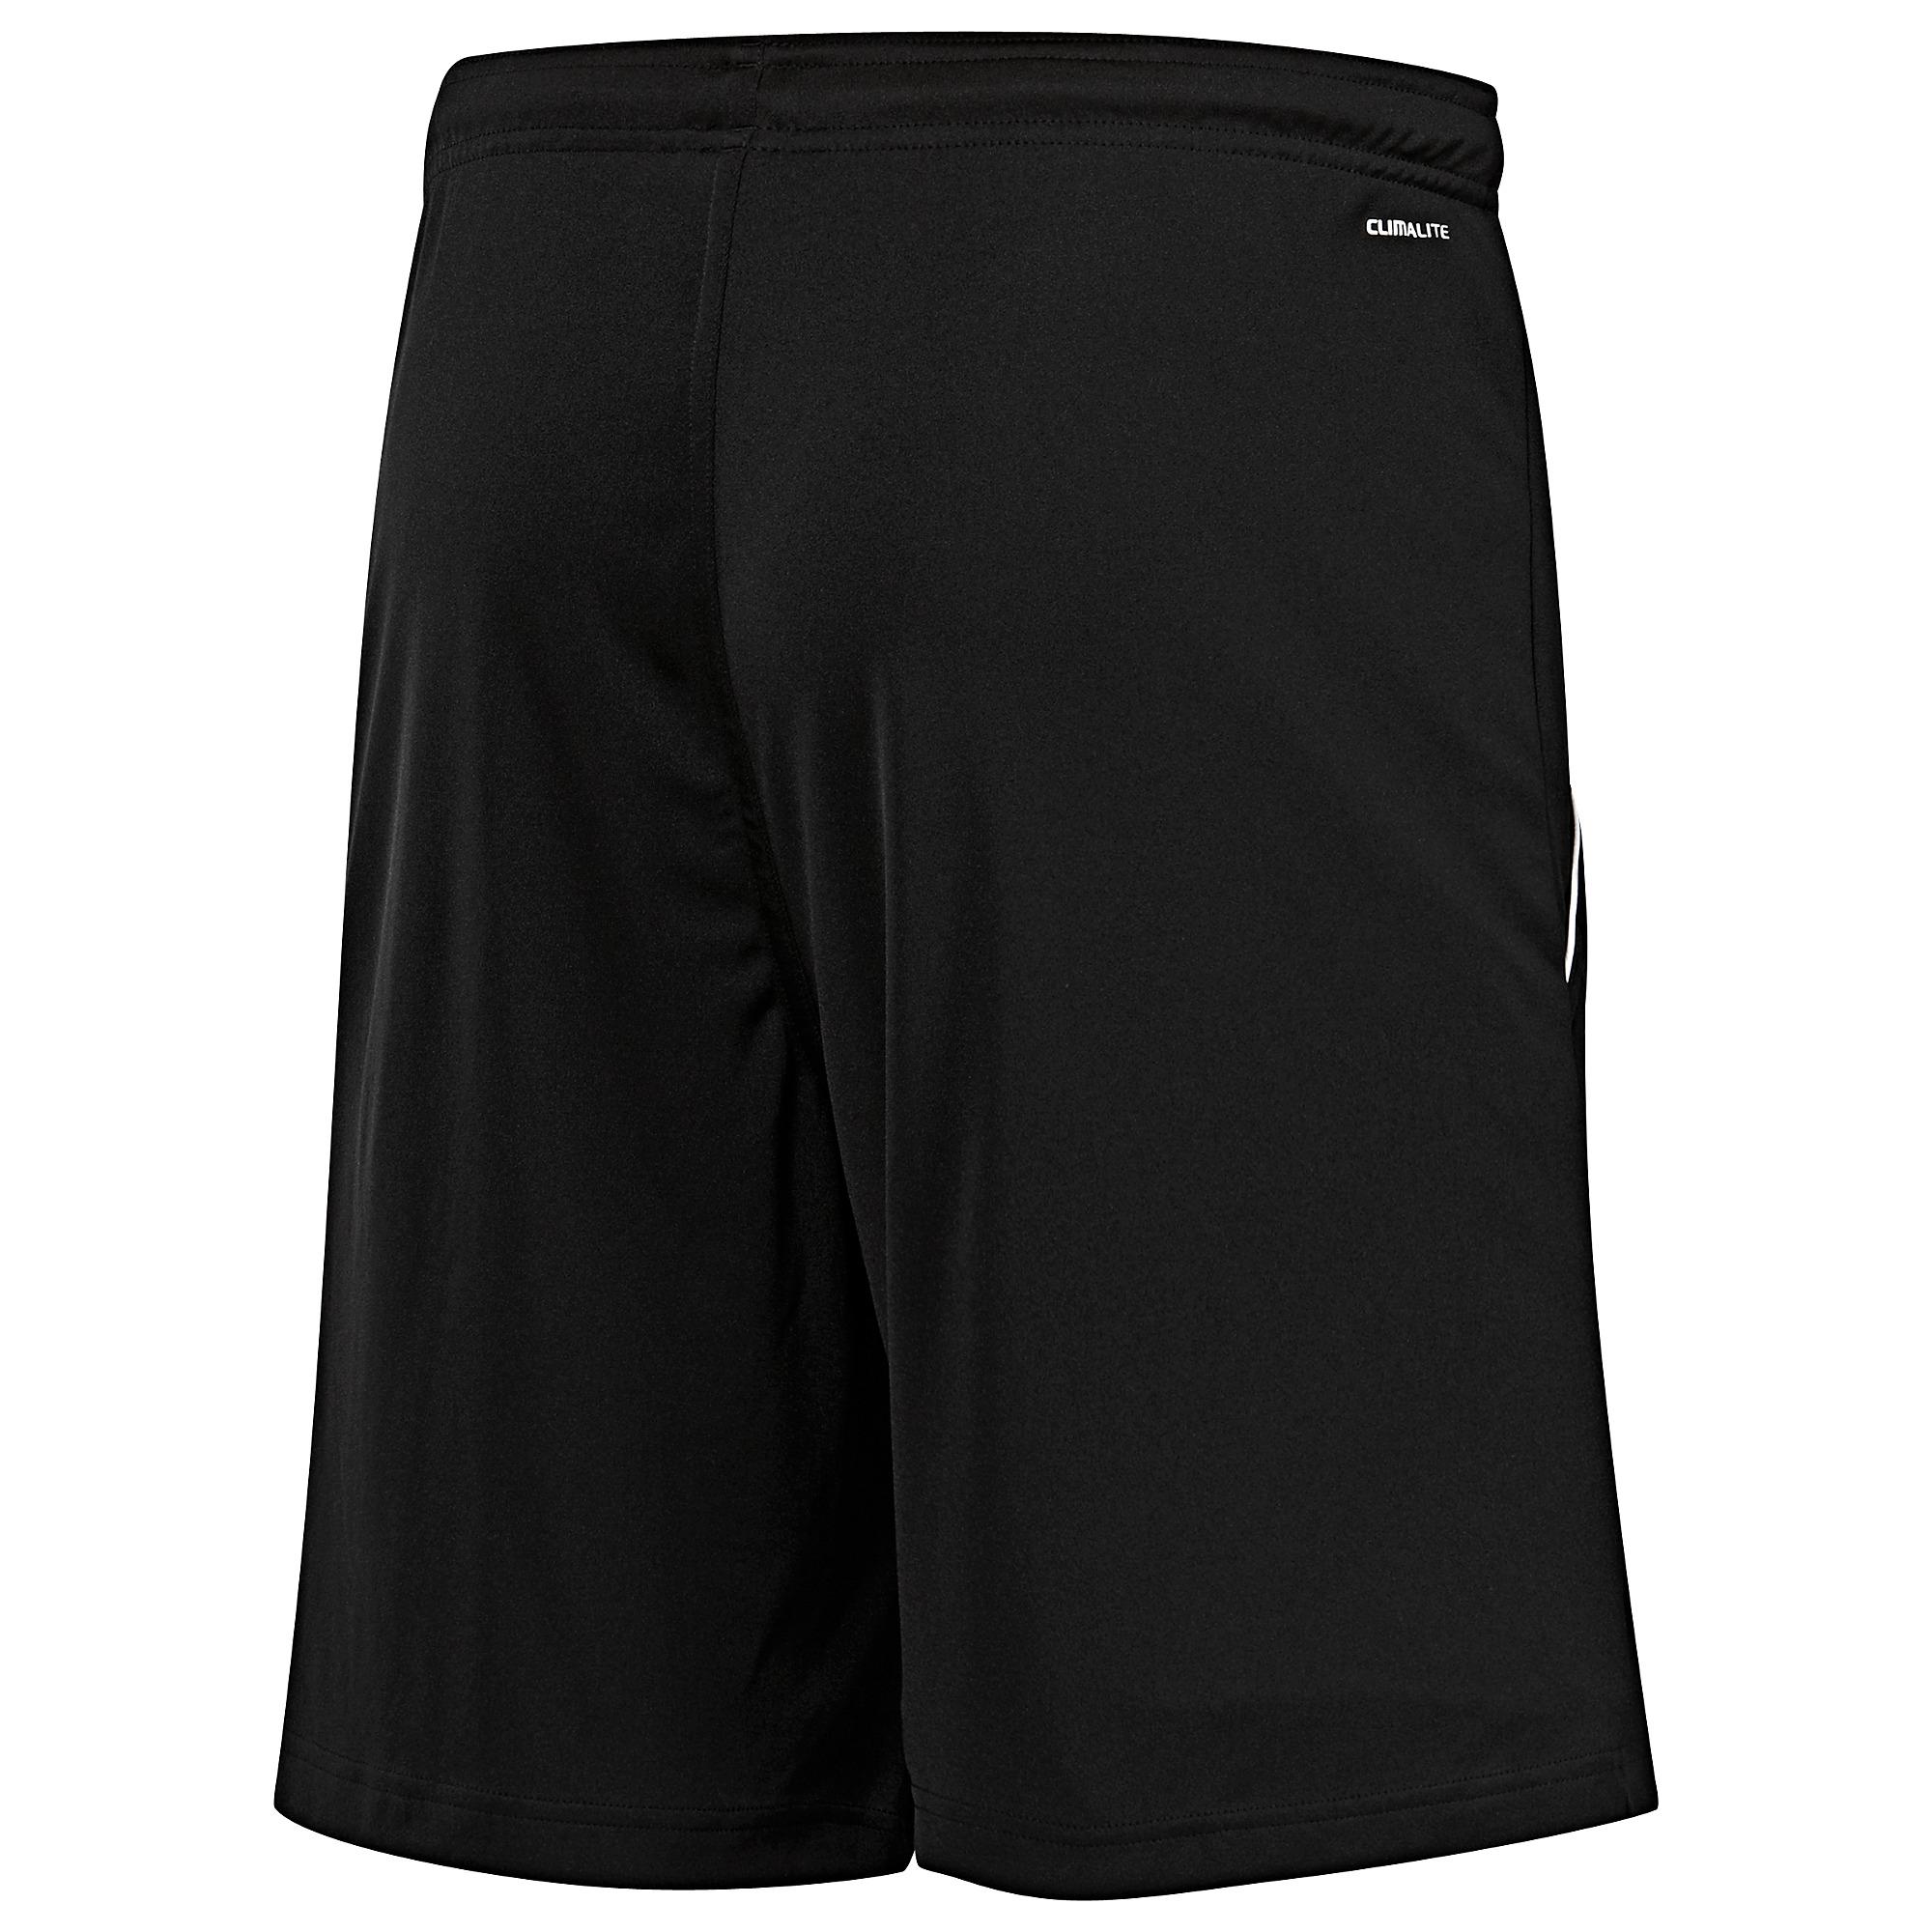 Adidas Mens Tennis Bermuda Shorts - Black - Tennisnuts.com